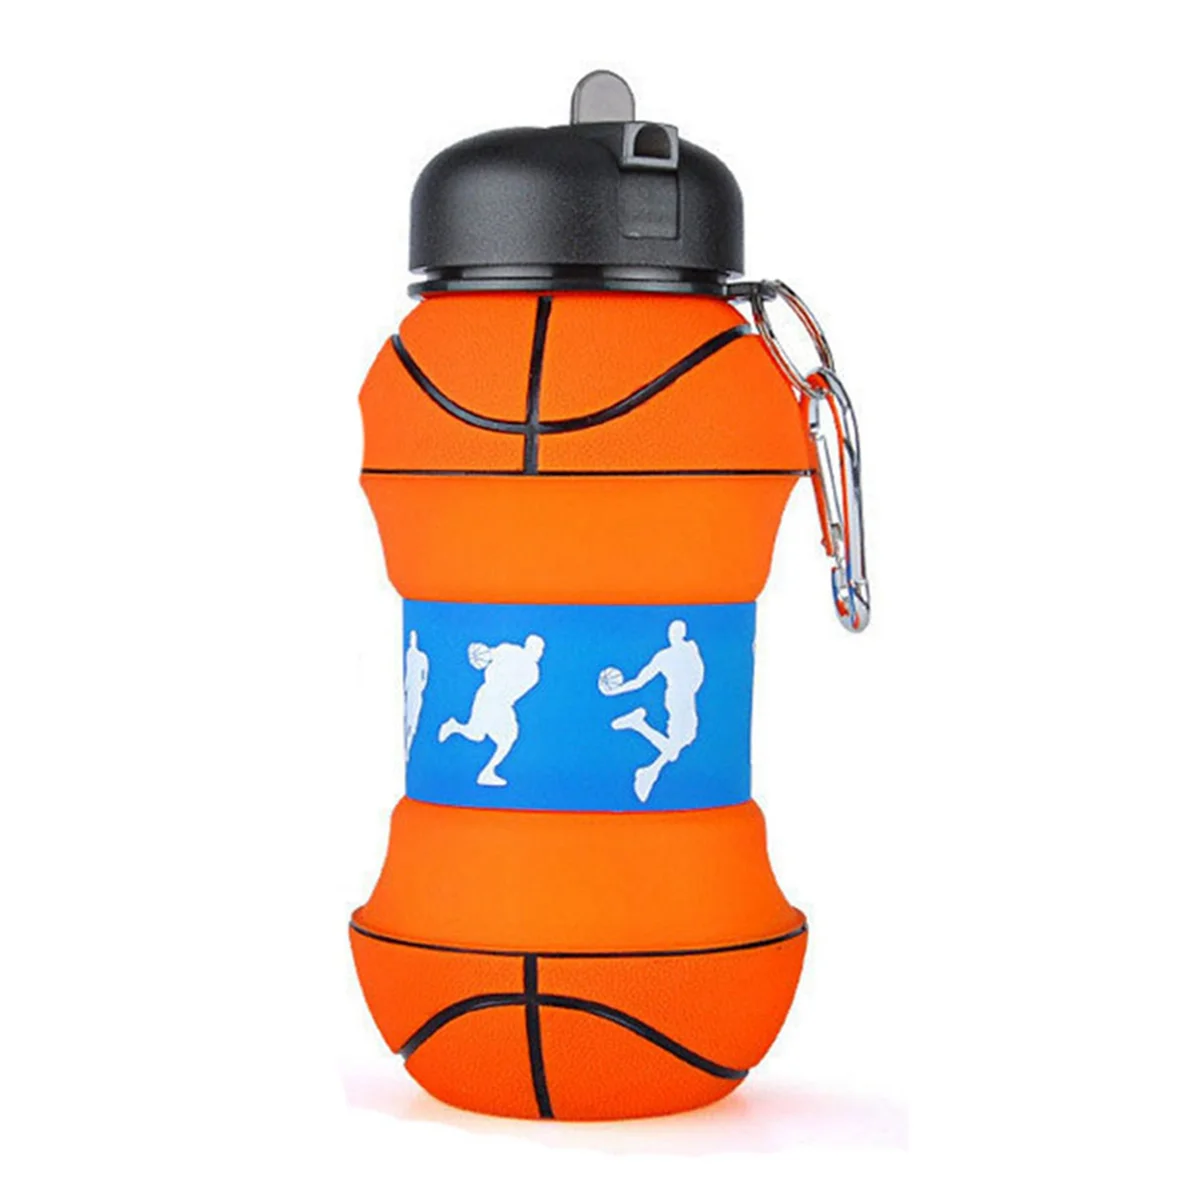 Складные бутылки для воды. Спортивная бутылка складная. Баскетбольная бутылка для воды. Спортивная бутылка для детей. Спортивные бутылки для воды детские.